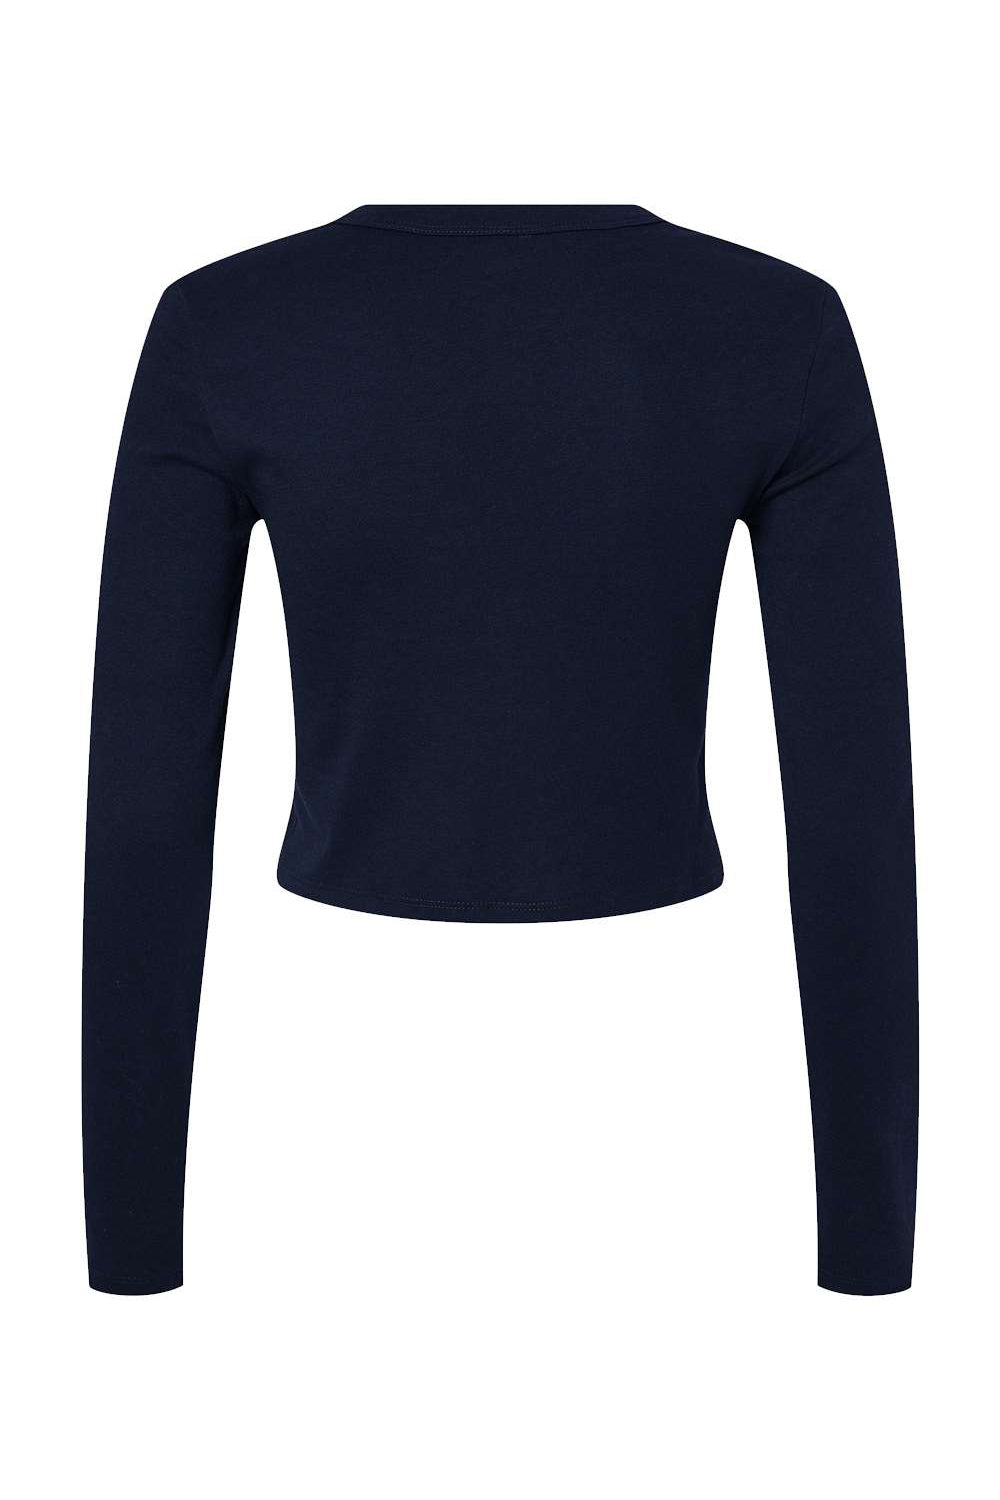 Bella + Canvas 1501 Womens Micro Rib Long Sleeve Crewneck T-Shirt Solid Navy Blue Blend Flat Back